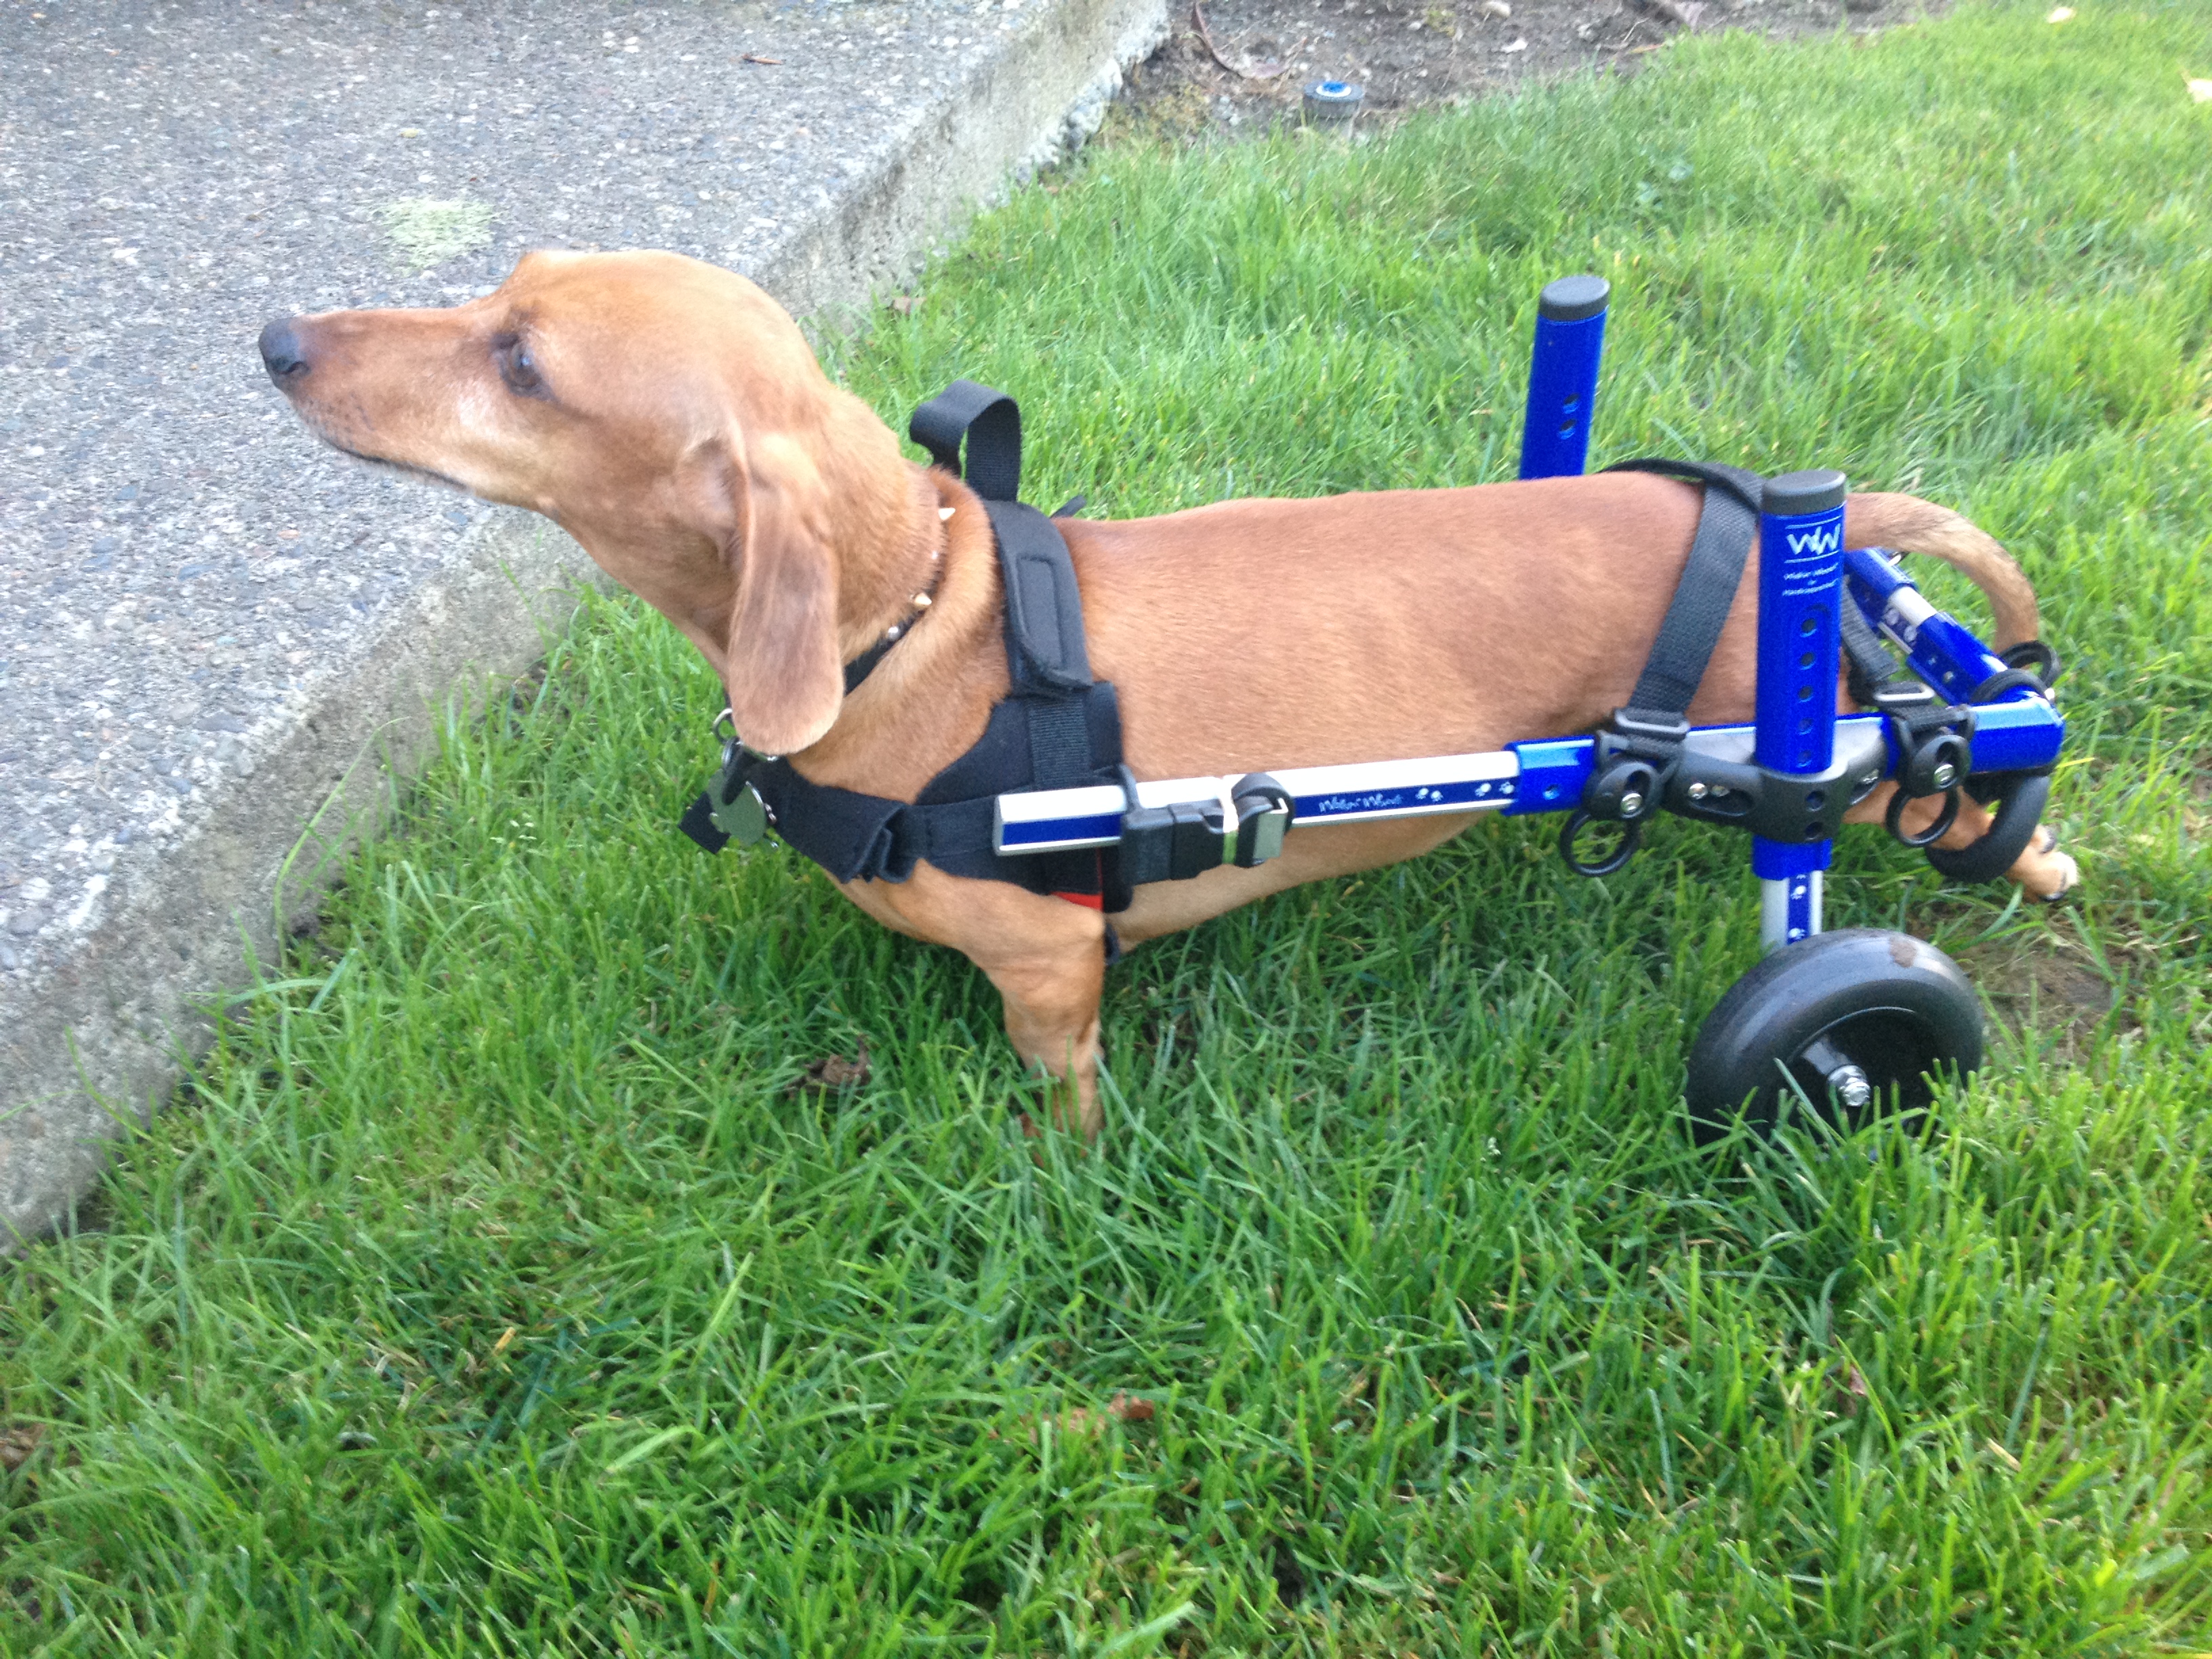 Paralyzed dachshund, Tucker learns to walk again